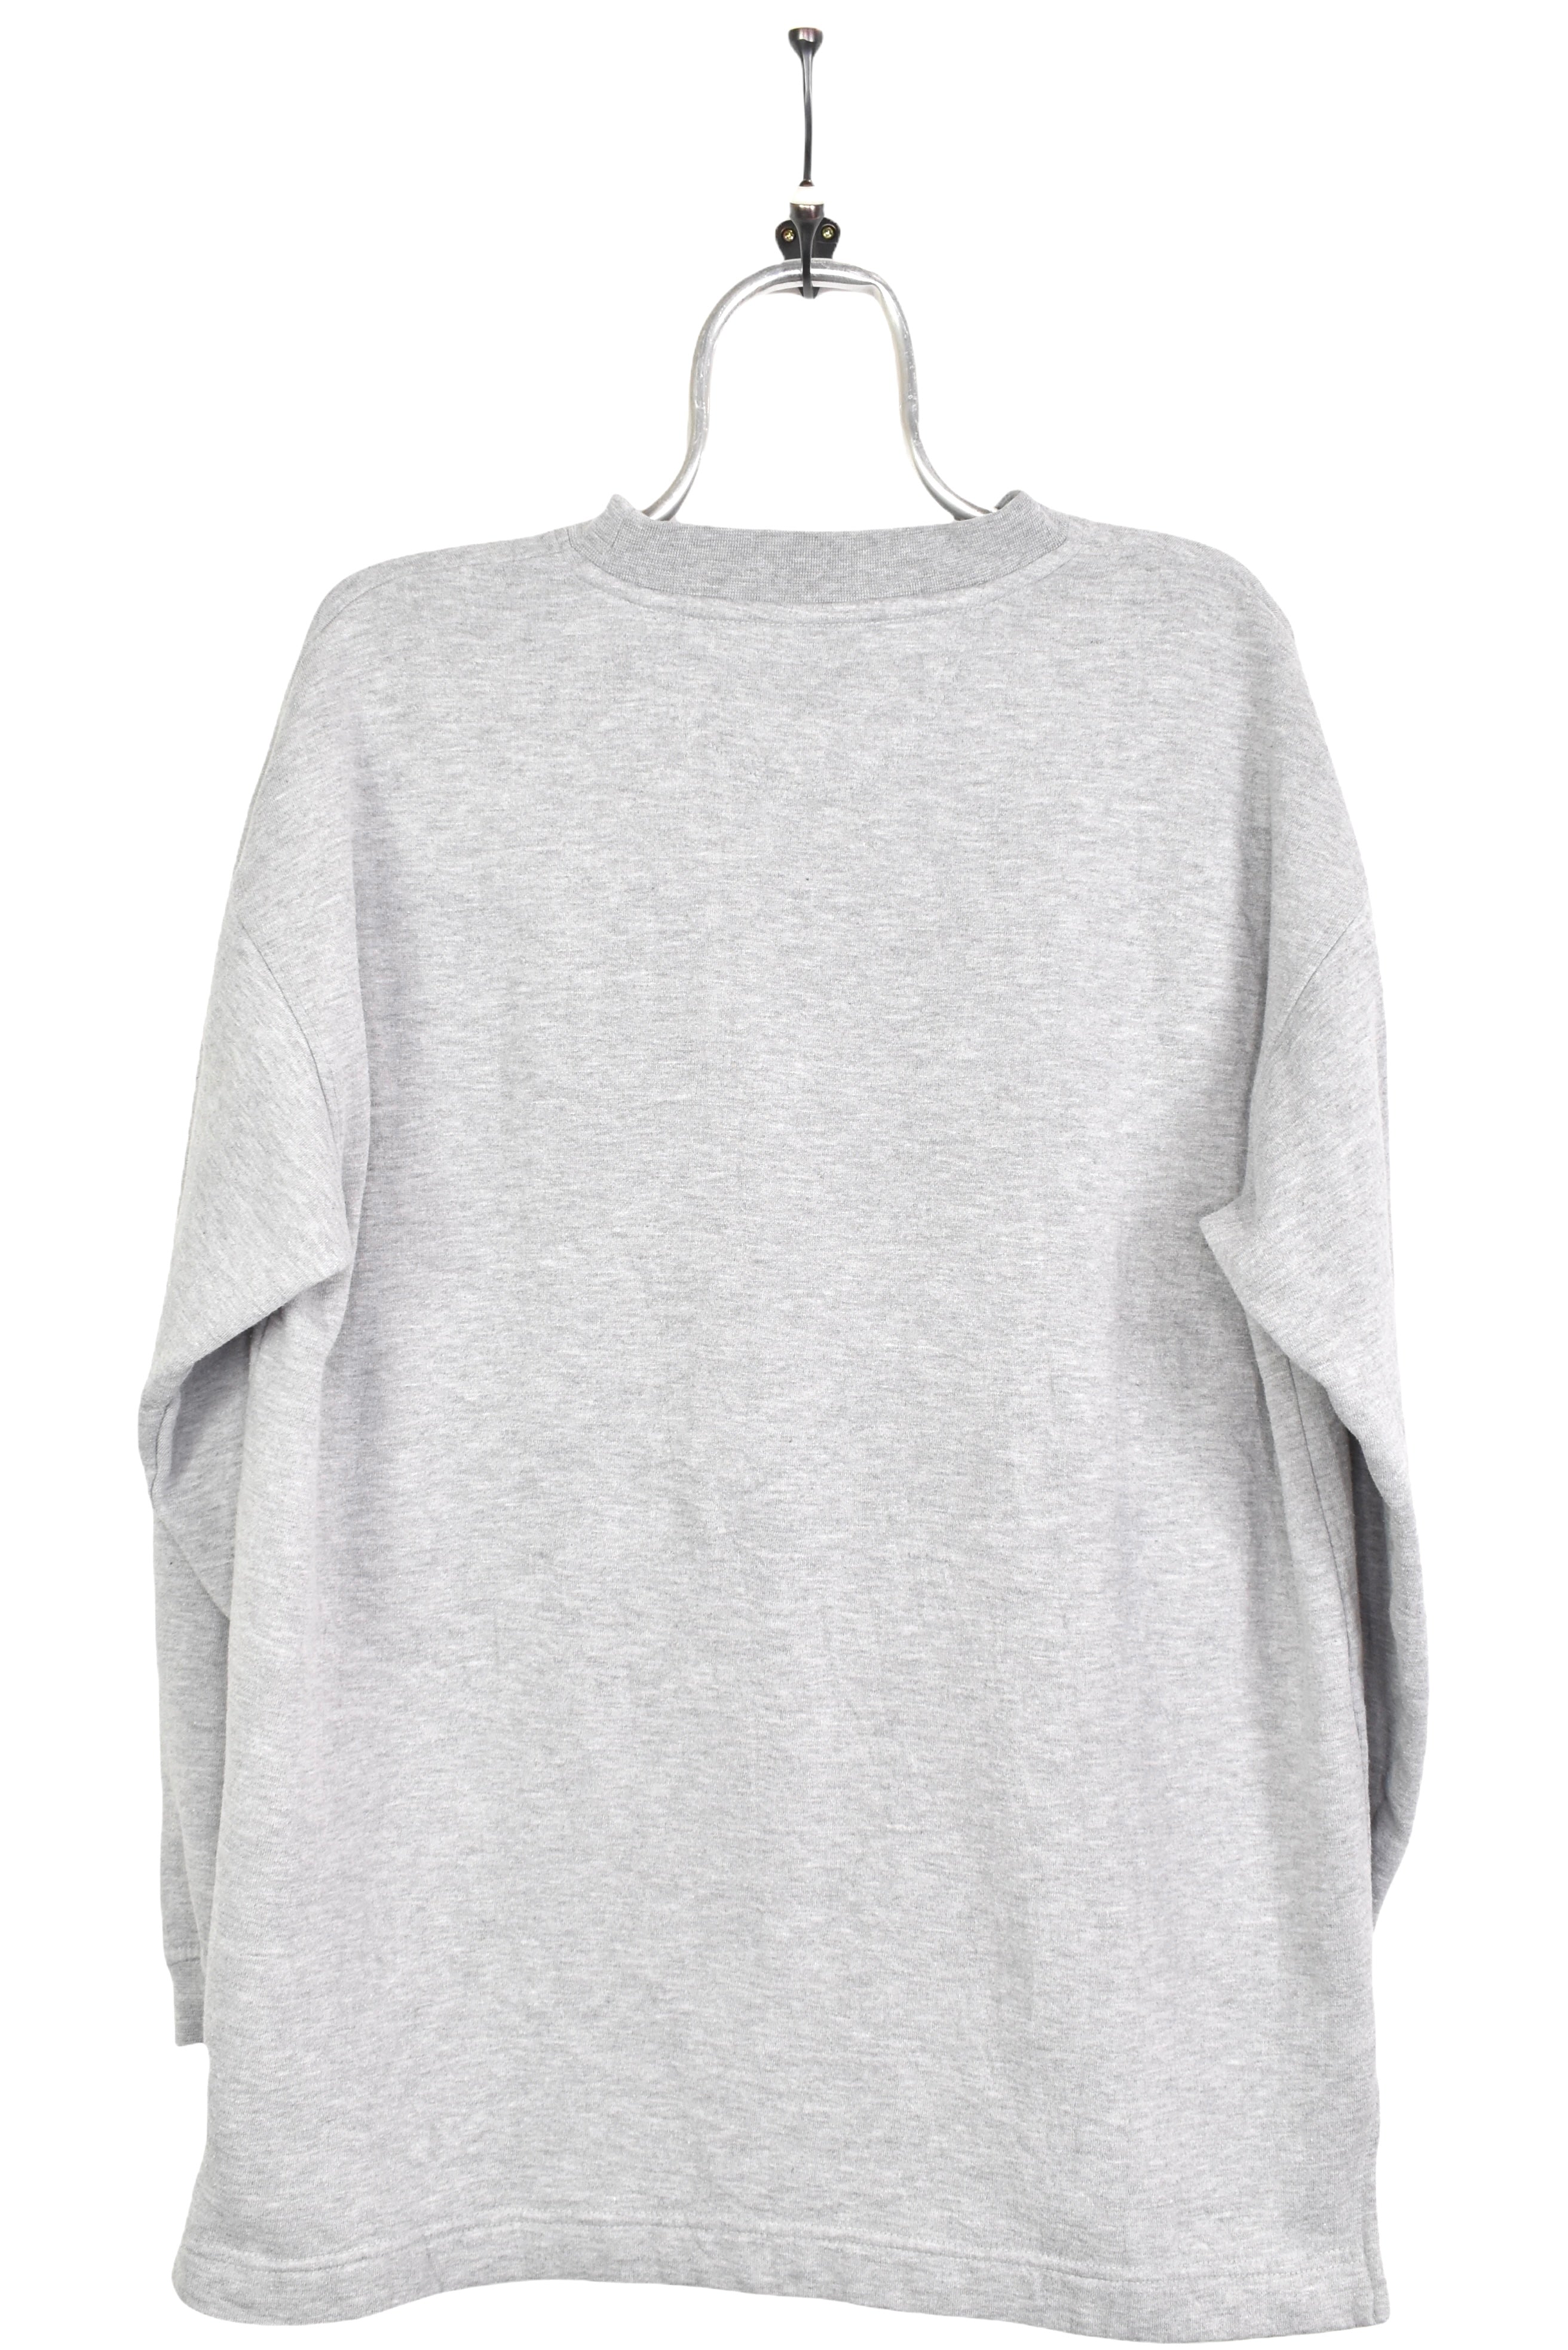 Vintage Florida State University embroidered grey sweatshirt | XL COLLEGE